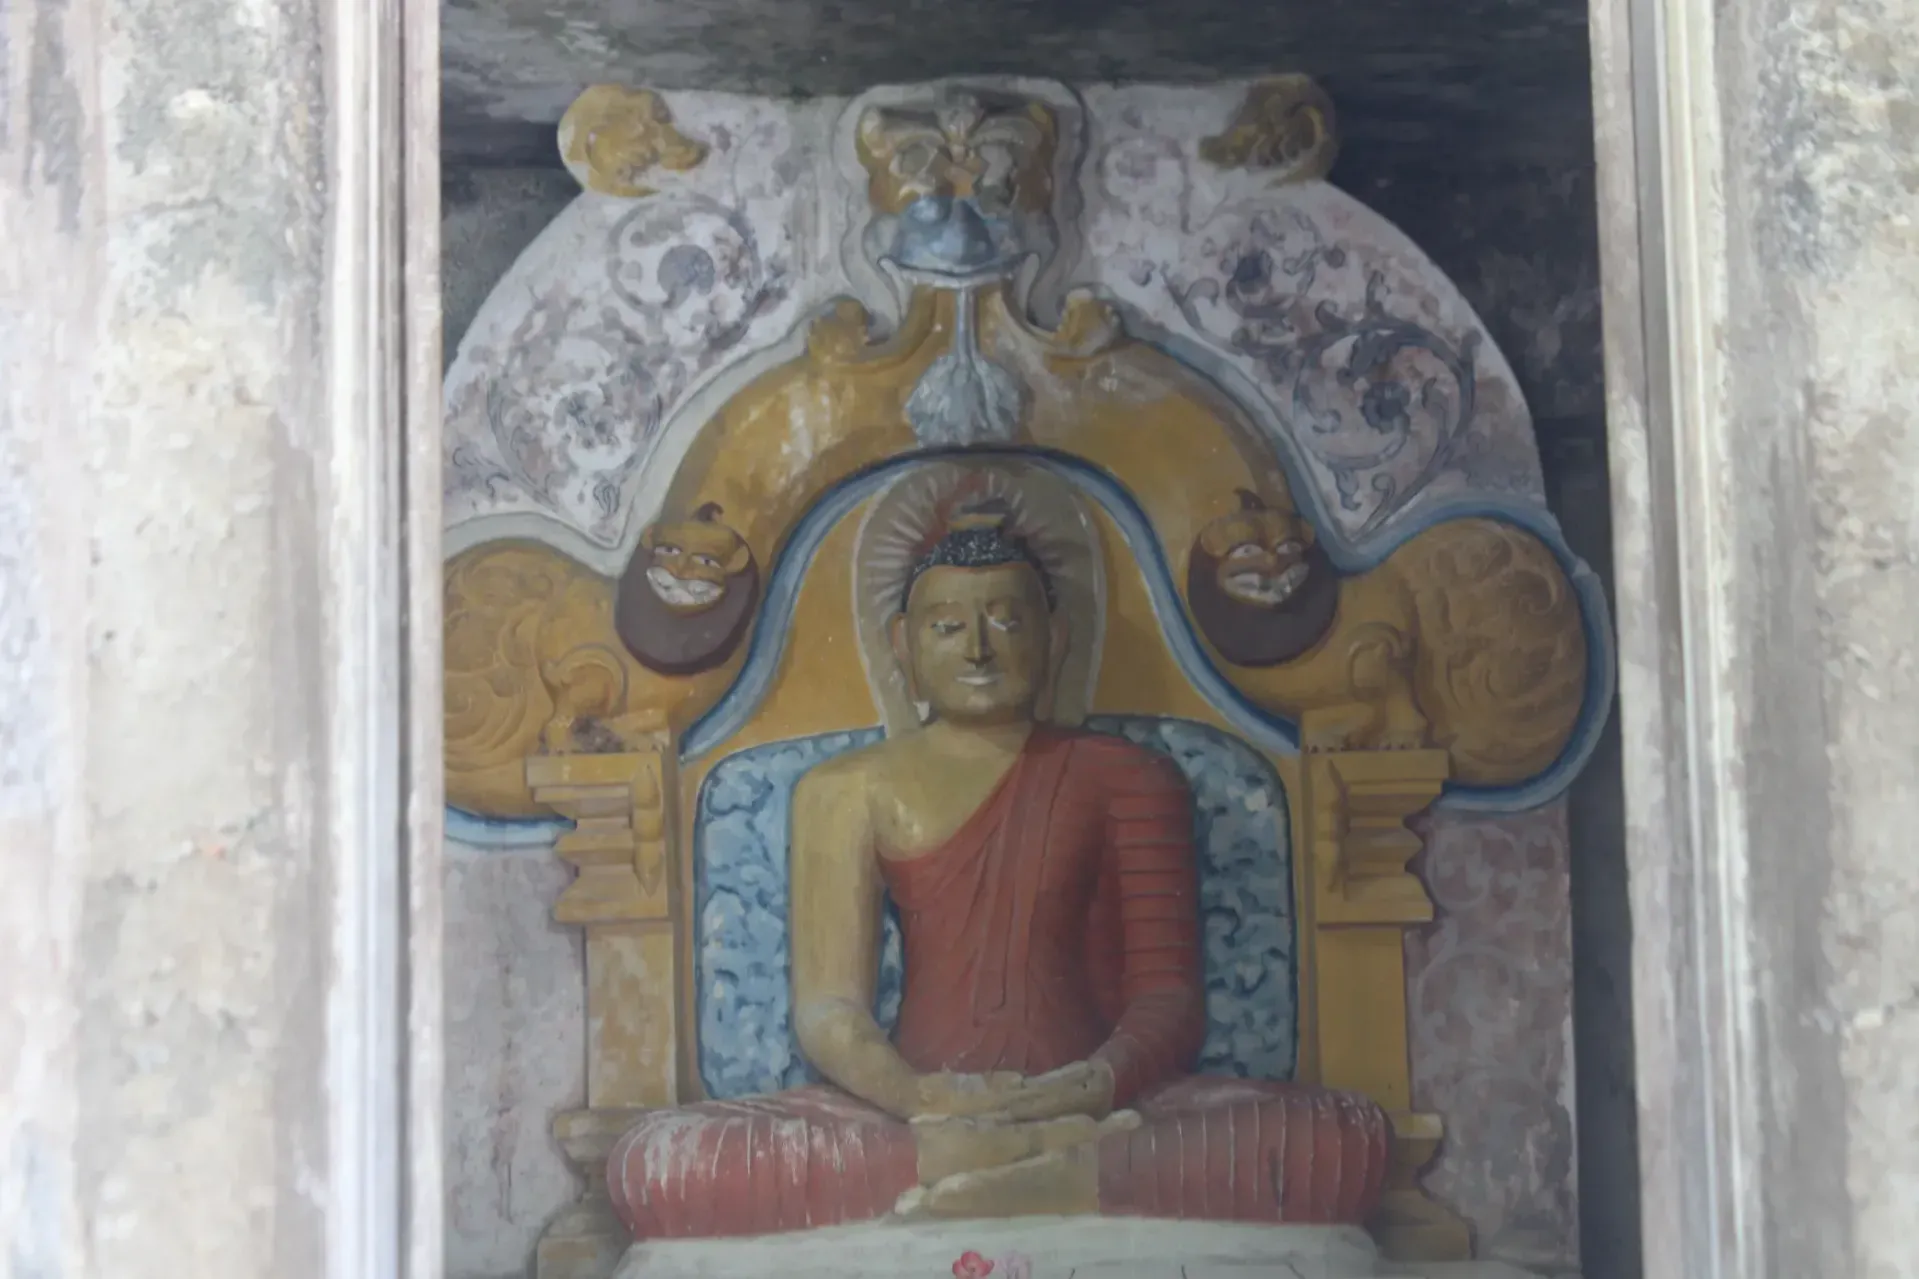 A smaller Buddha statue at Gadaladeniya Temple, Sri Lanka